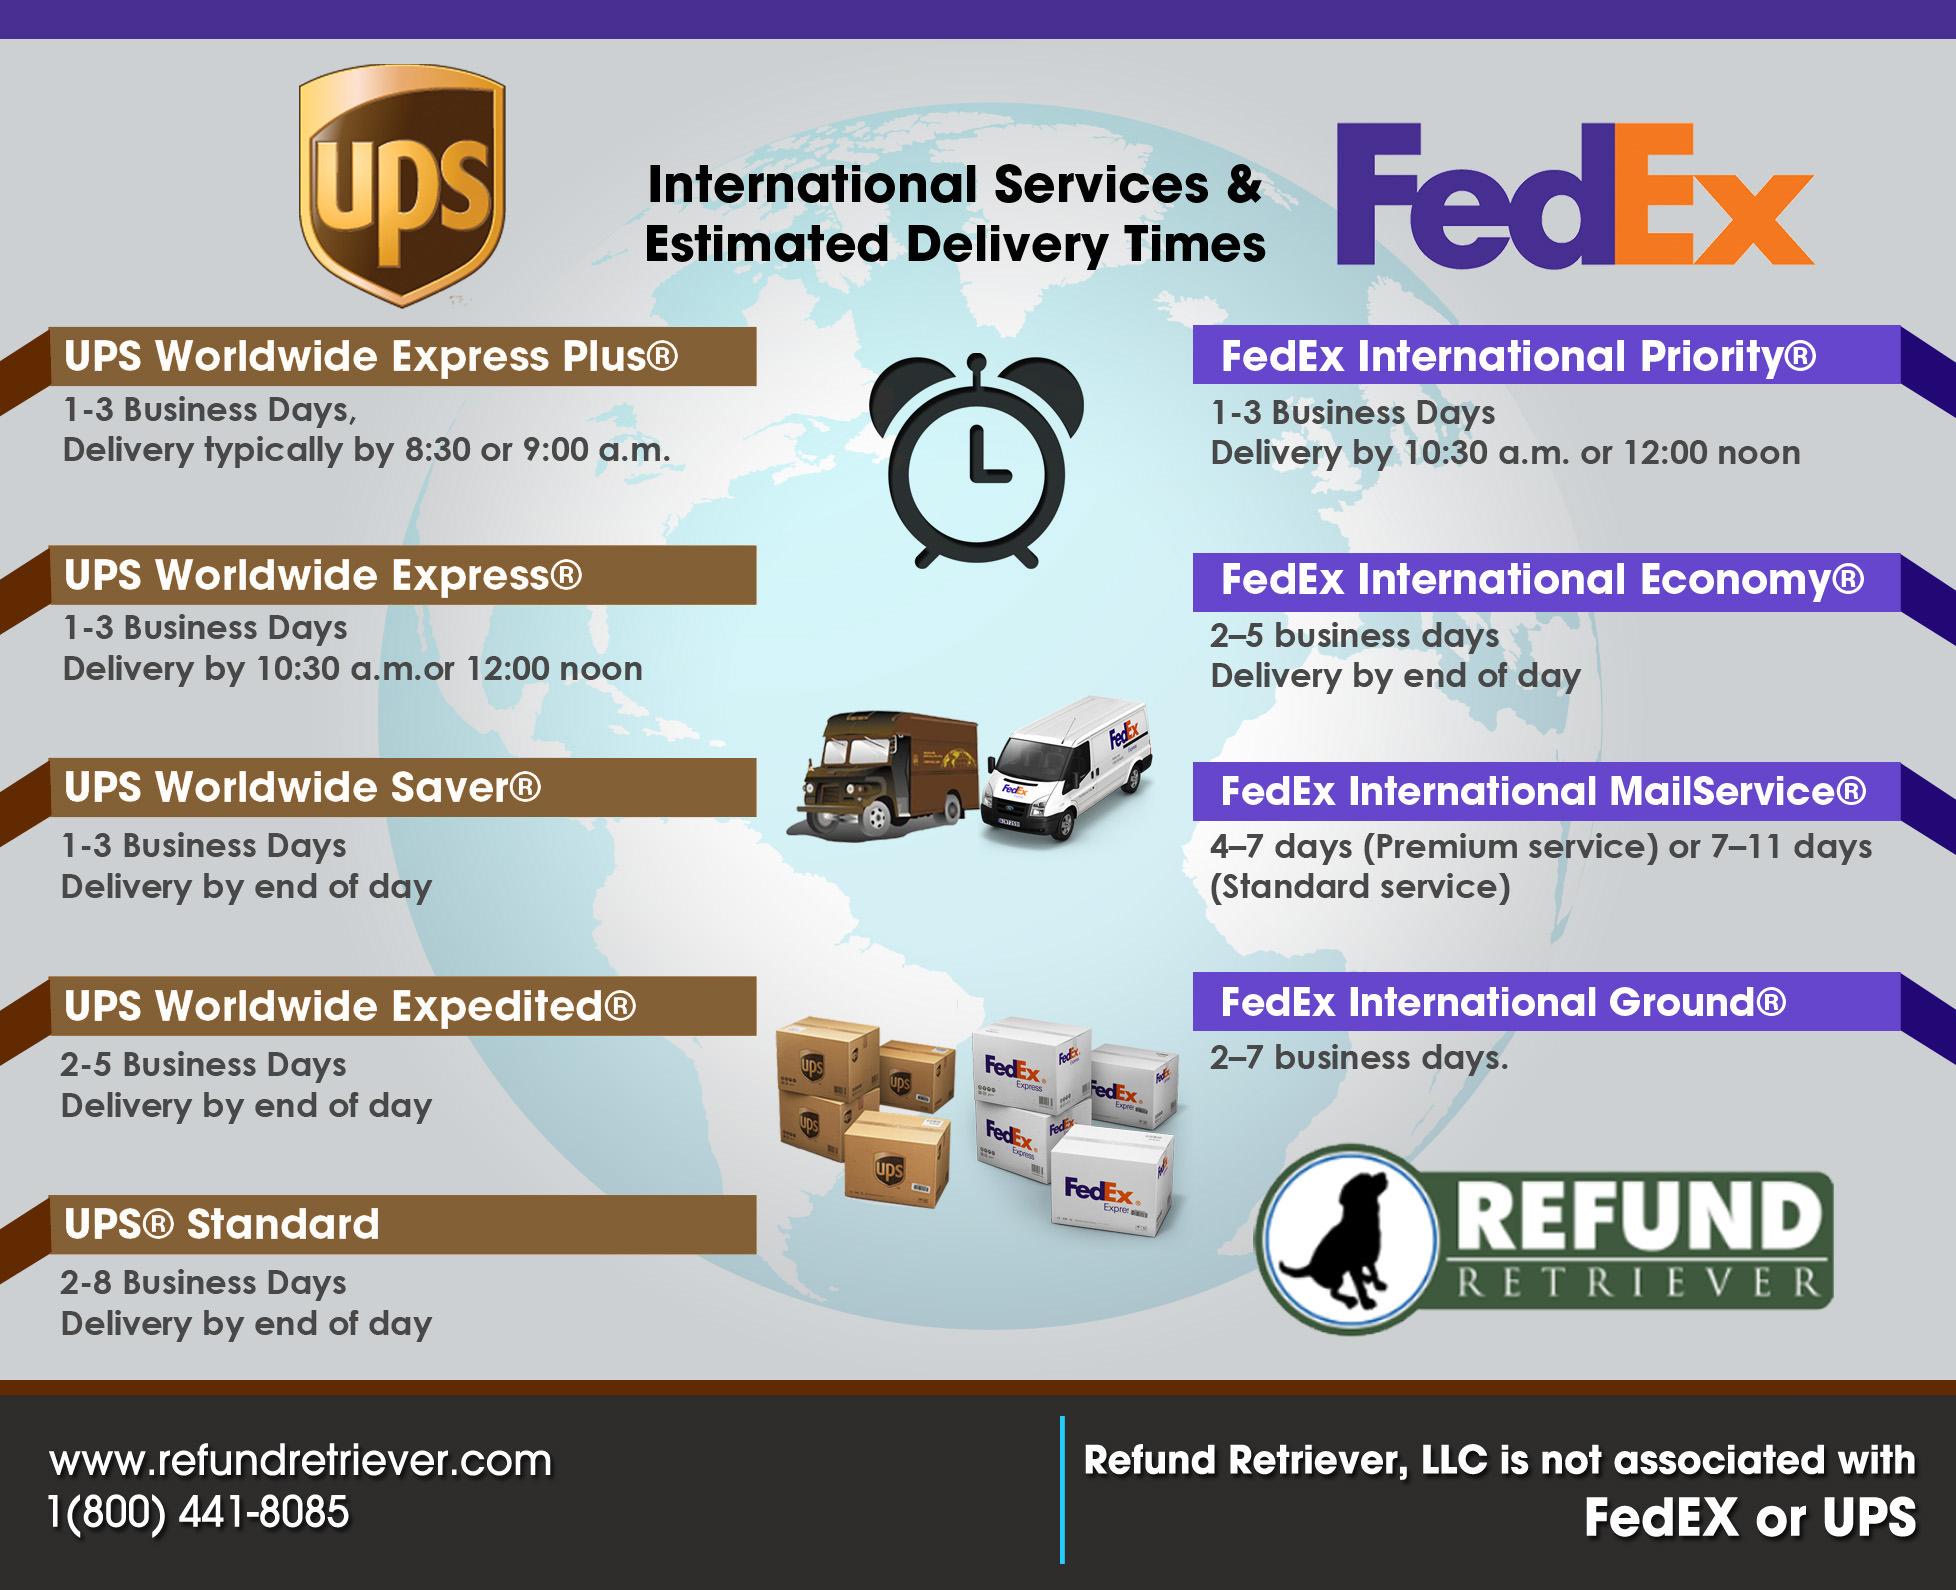 FedEx International Logo - UPS & FedEx International Services | Refund Retriever fedex ups ...